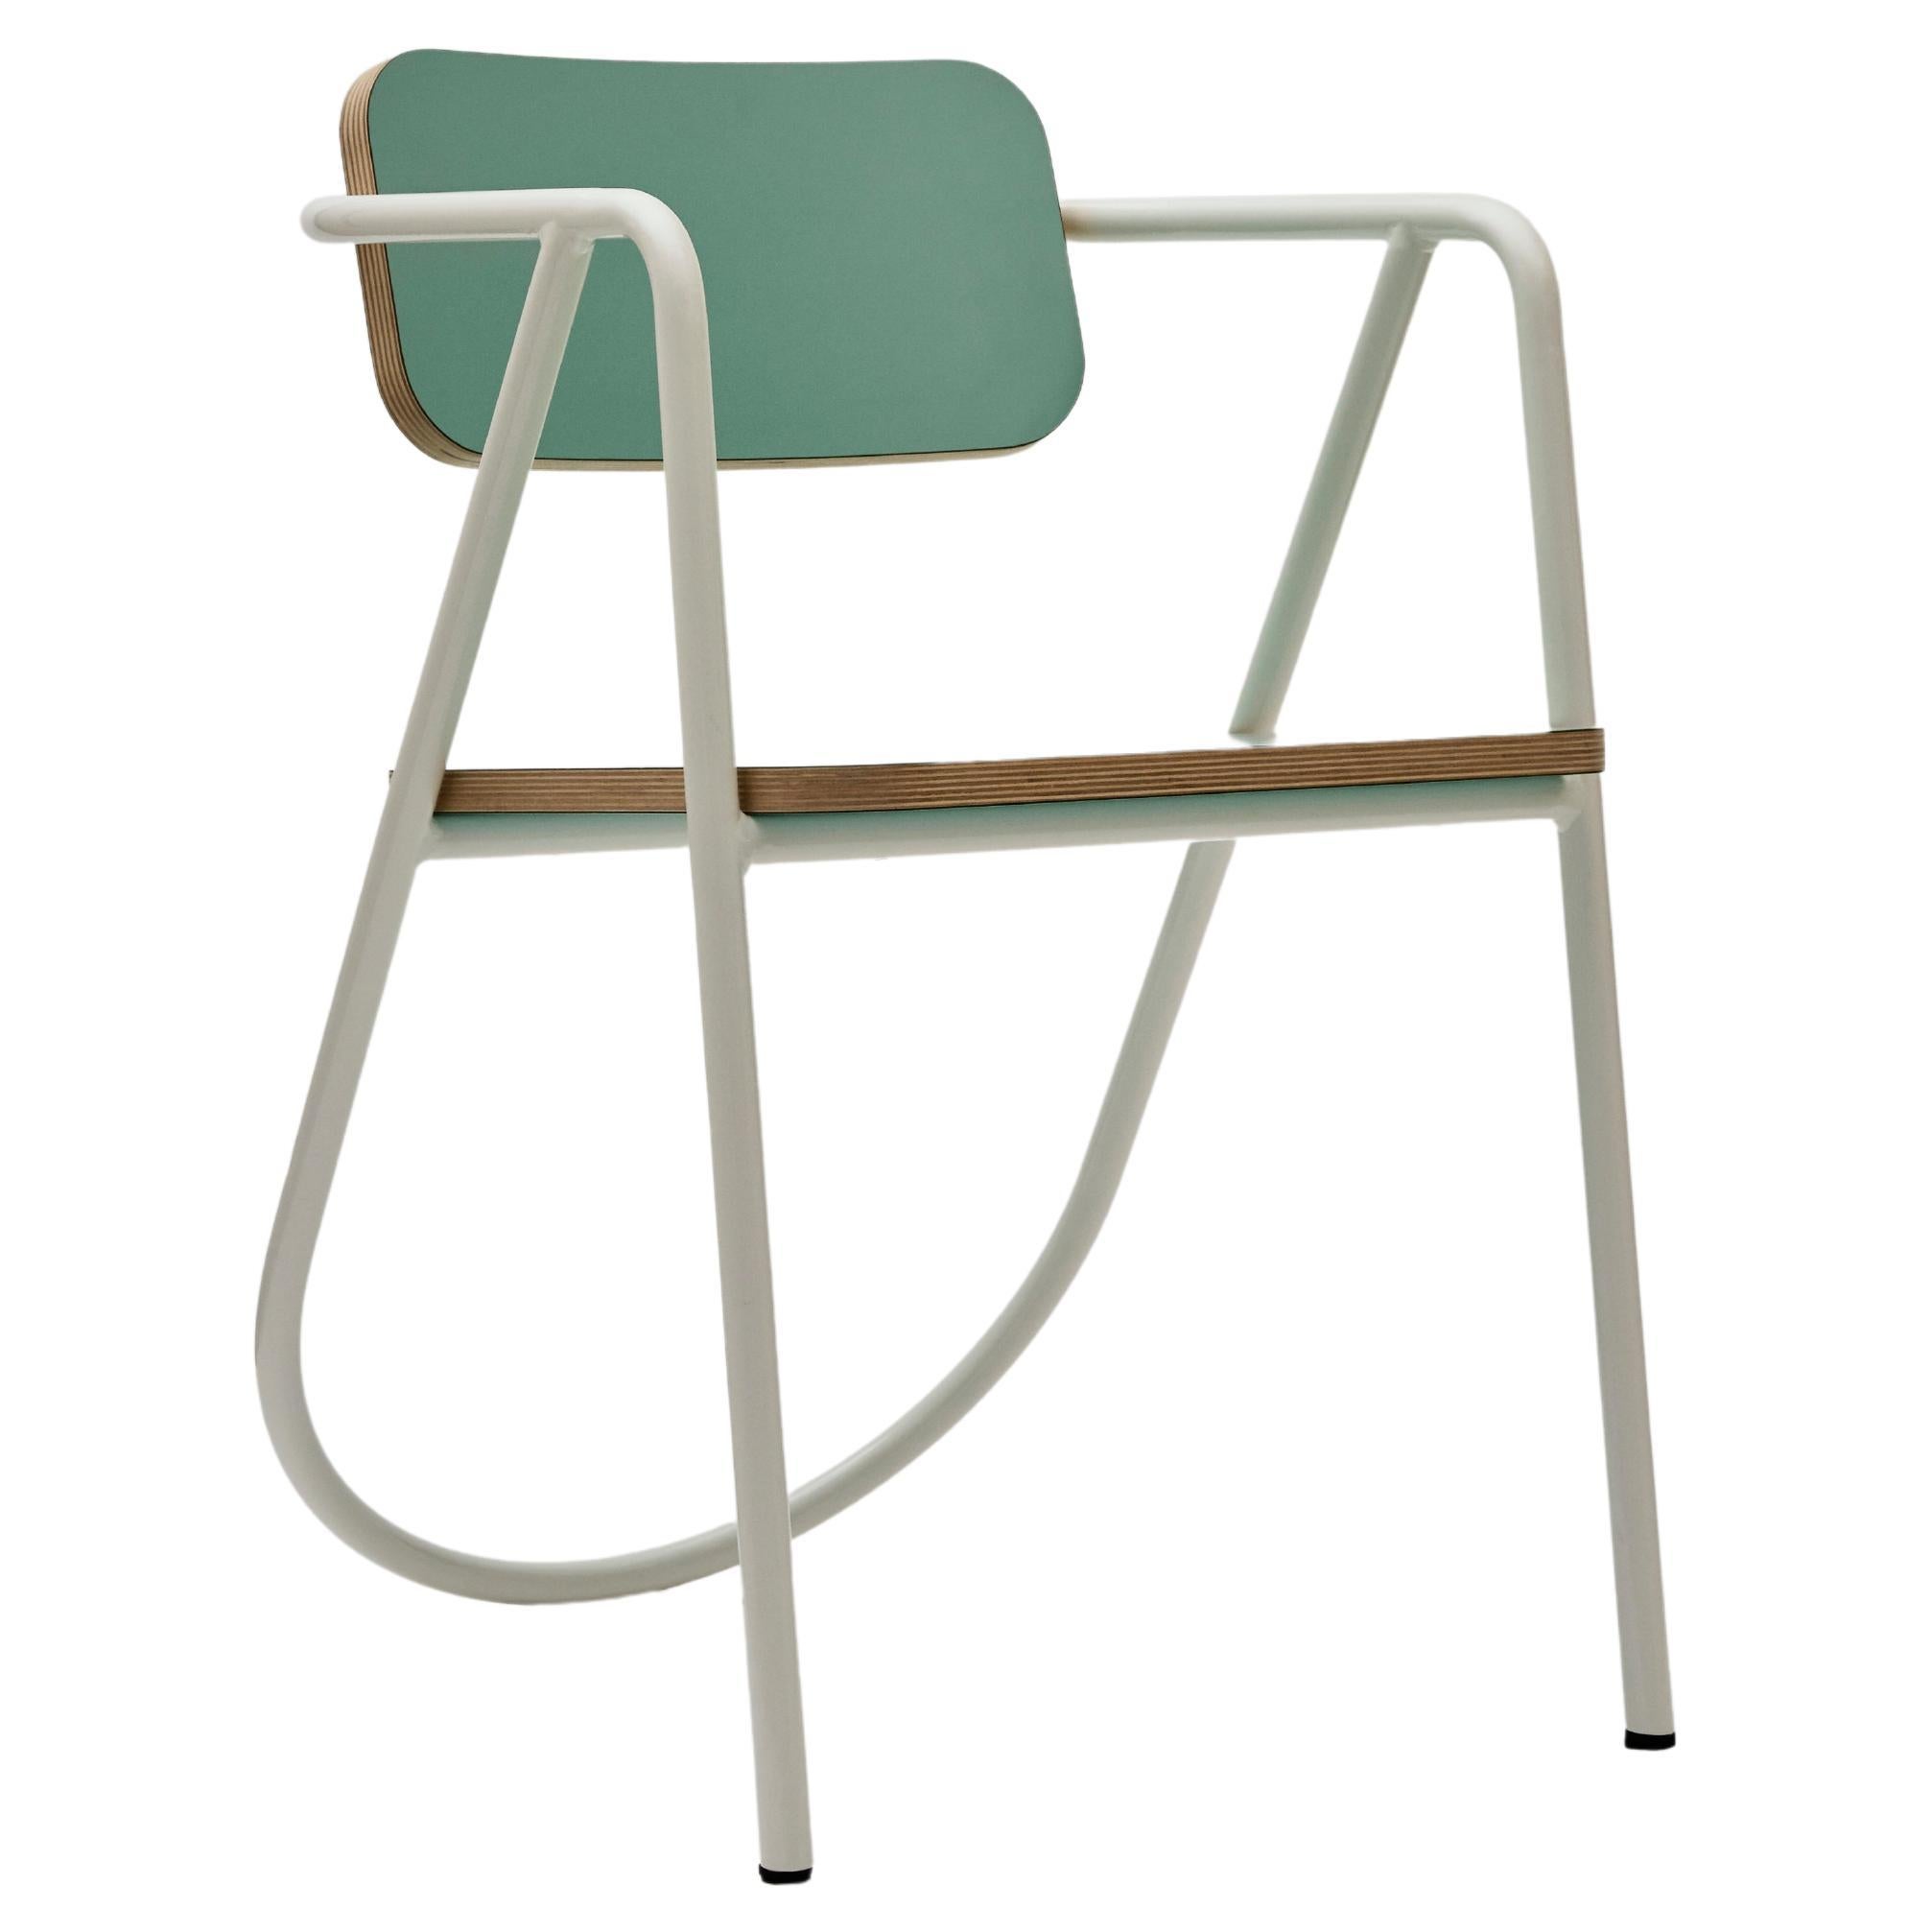 La Misciù Chair, Teal & Ivory For Sale